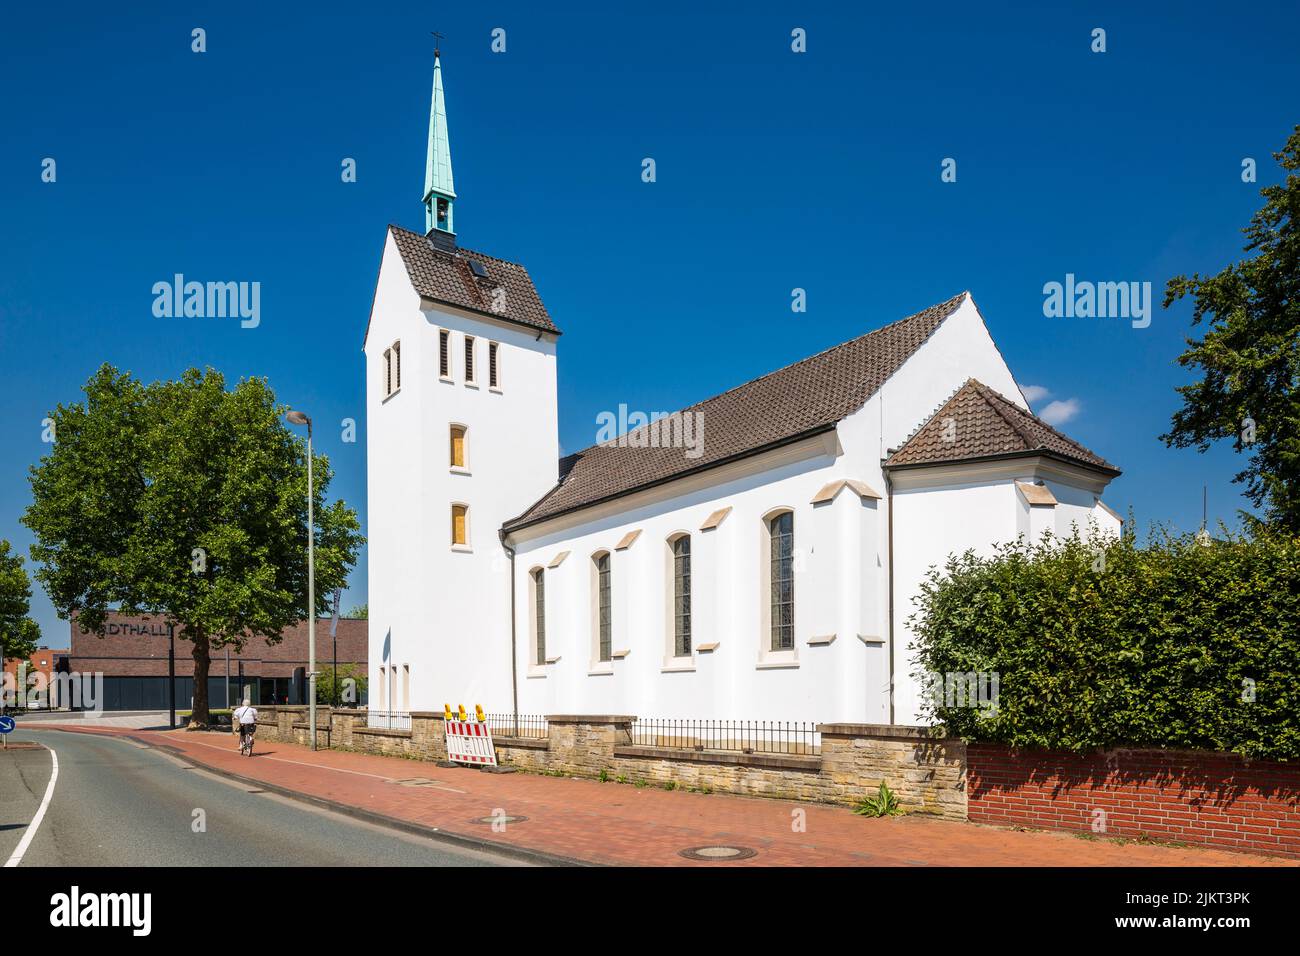 Germany, Ahaus, Westmuensterland, Muensterland, Westphalia, North Rhine-Westphalia, NRW, Evangelical Christus Church Stock Photo